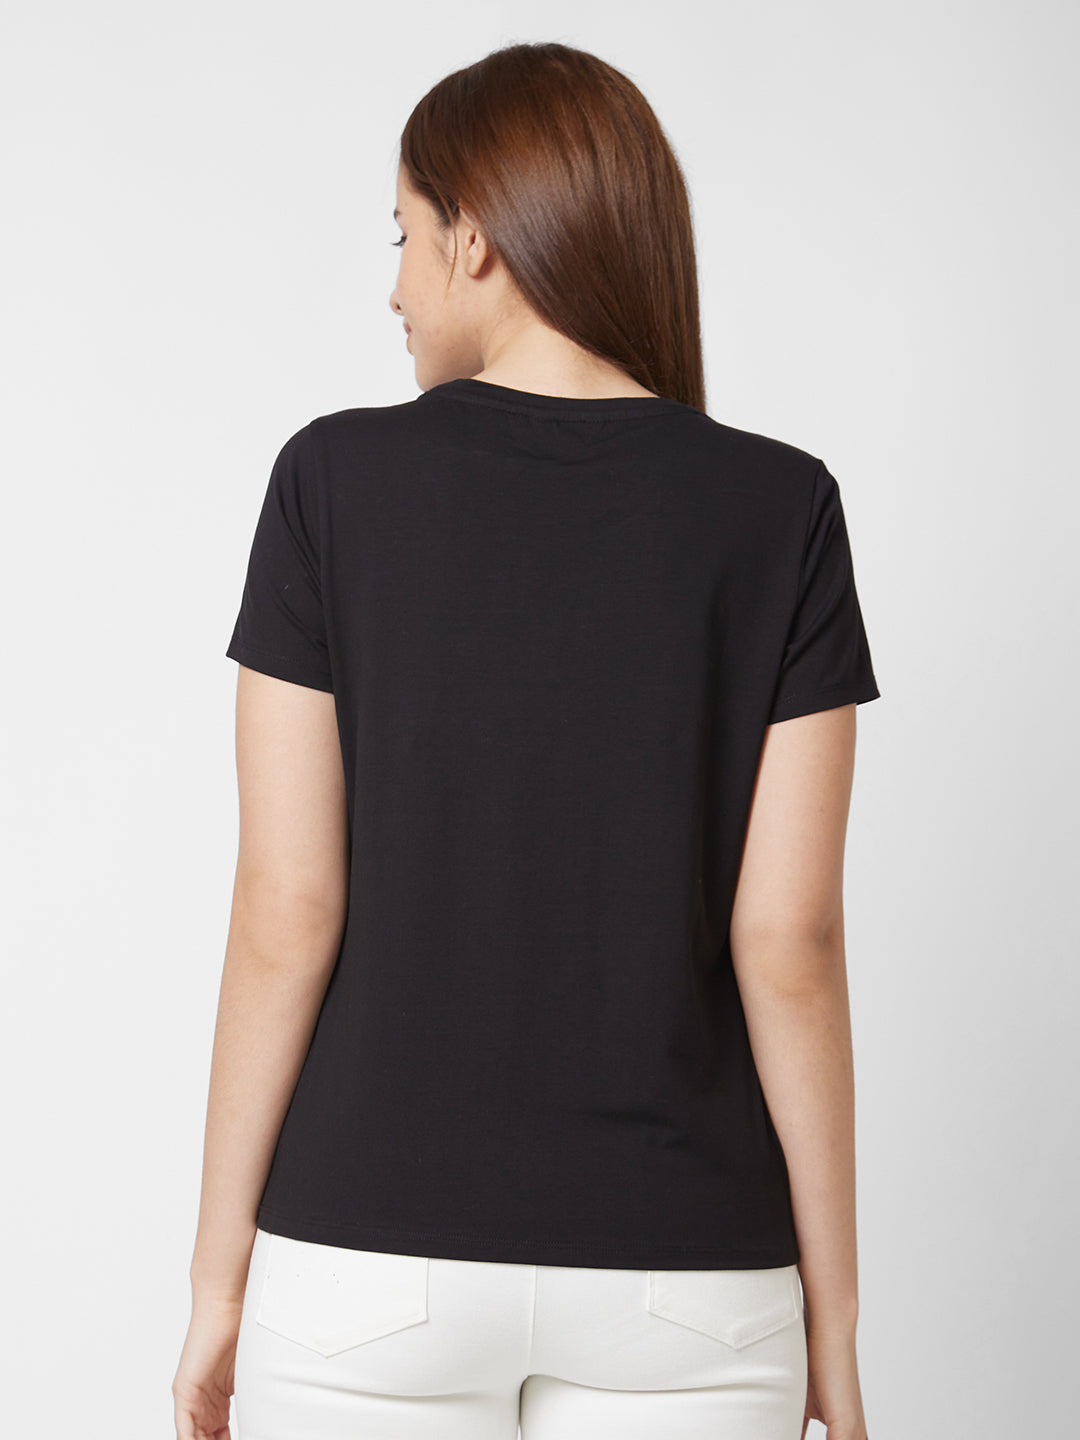 Spykar Round Neck Half Sleeve Black Printed T-Shirt For Women